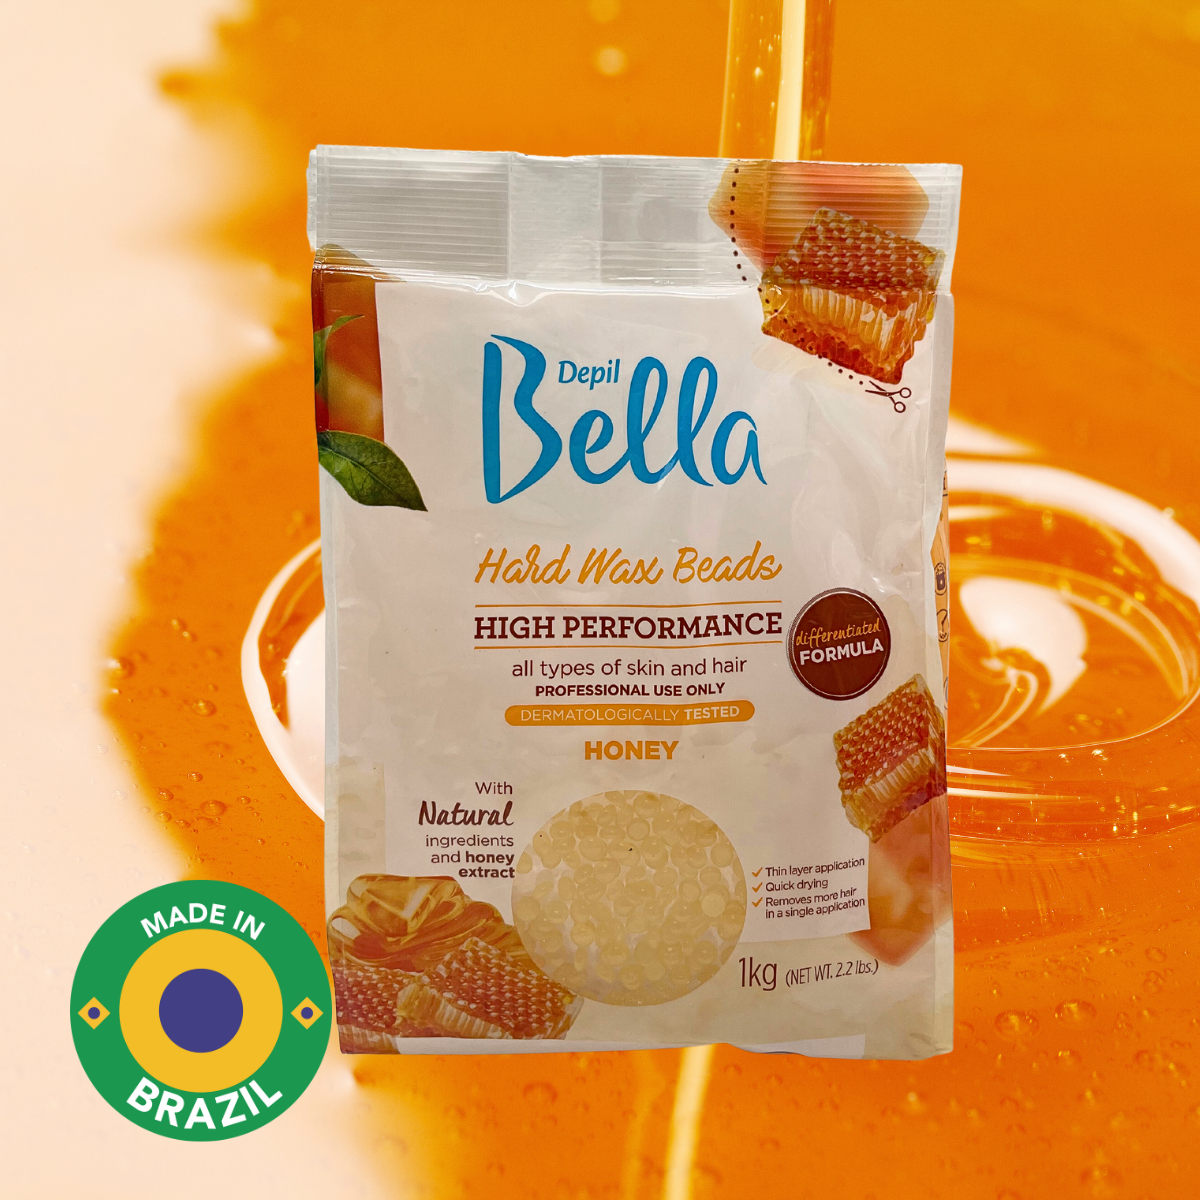 Depil Bella Hard Wax Beads Honey - Professional Hair Removal, 2.2 lbs